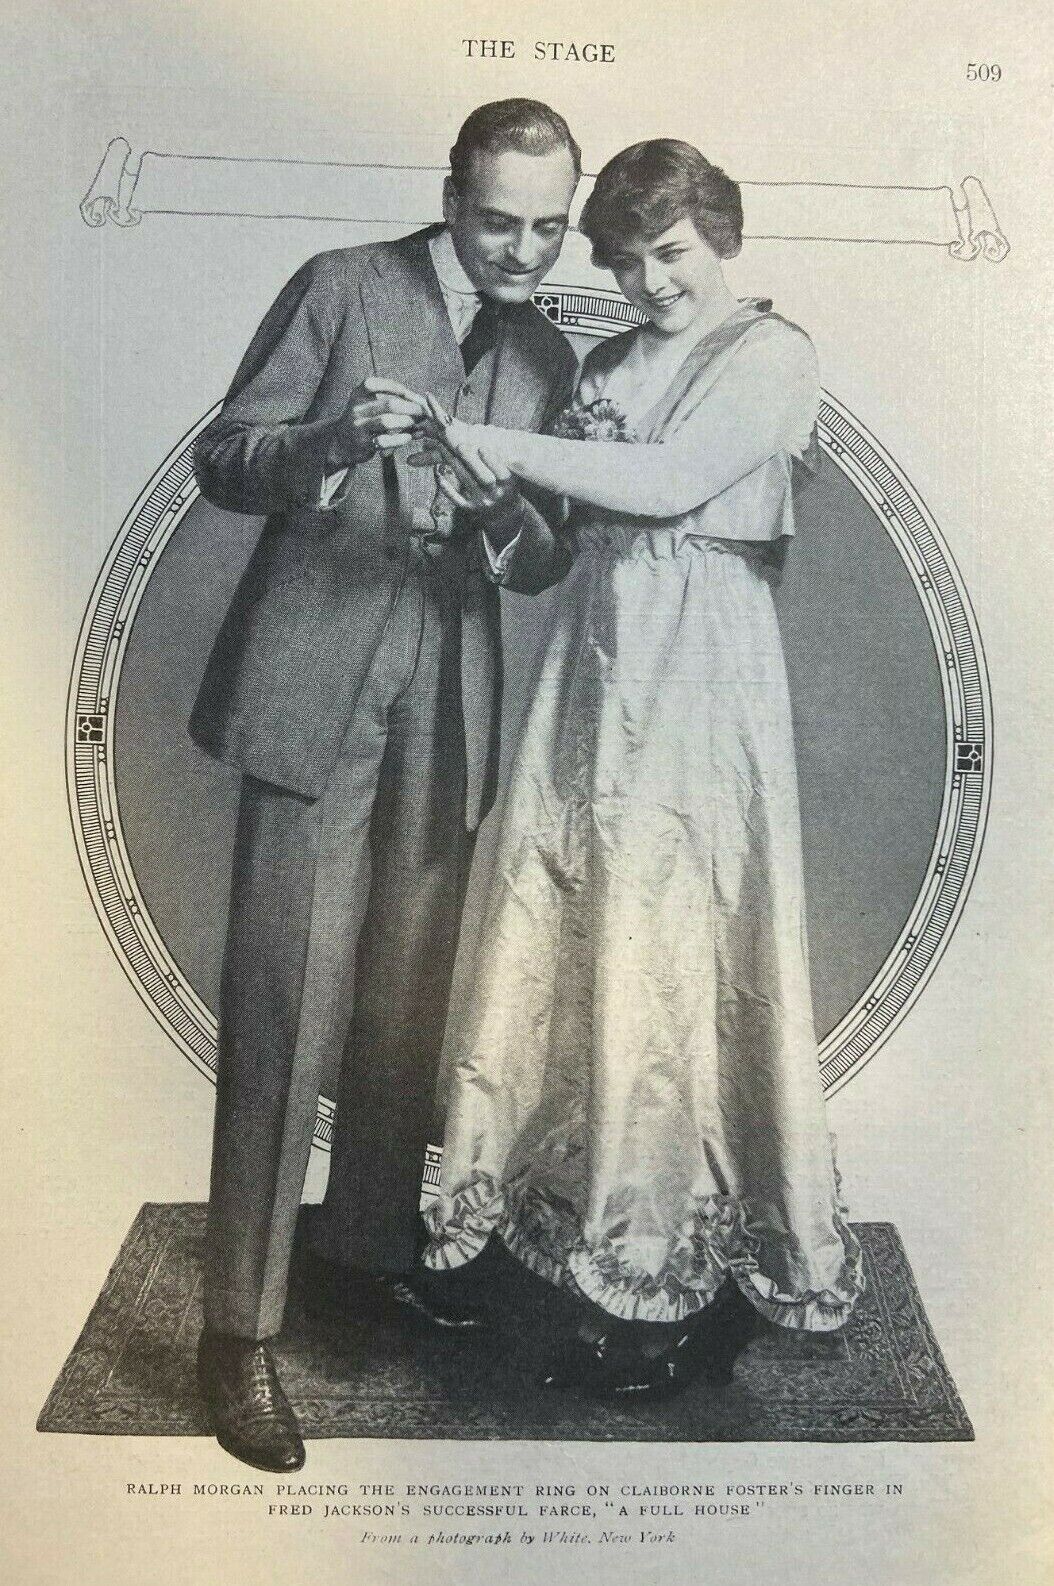 1915 Vintage Magazine Illustration Actors Ralph Morgan and Clairborne Foster